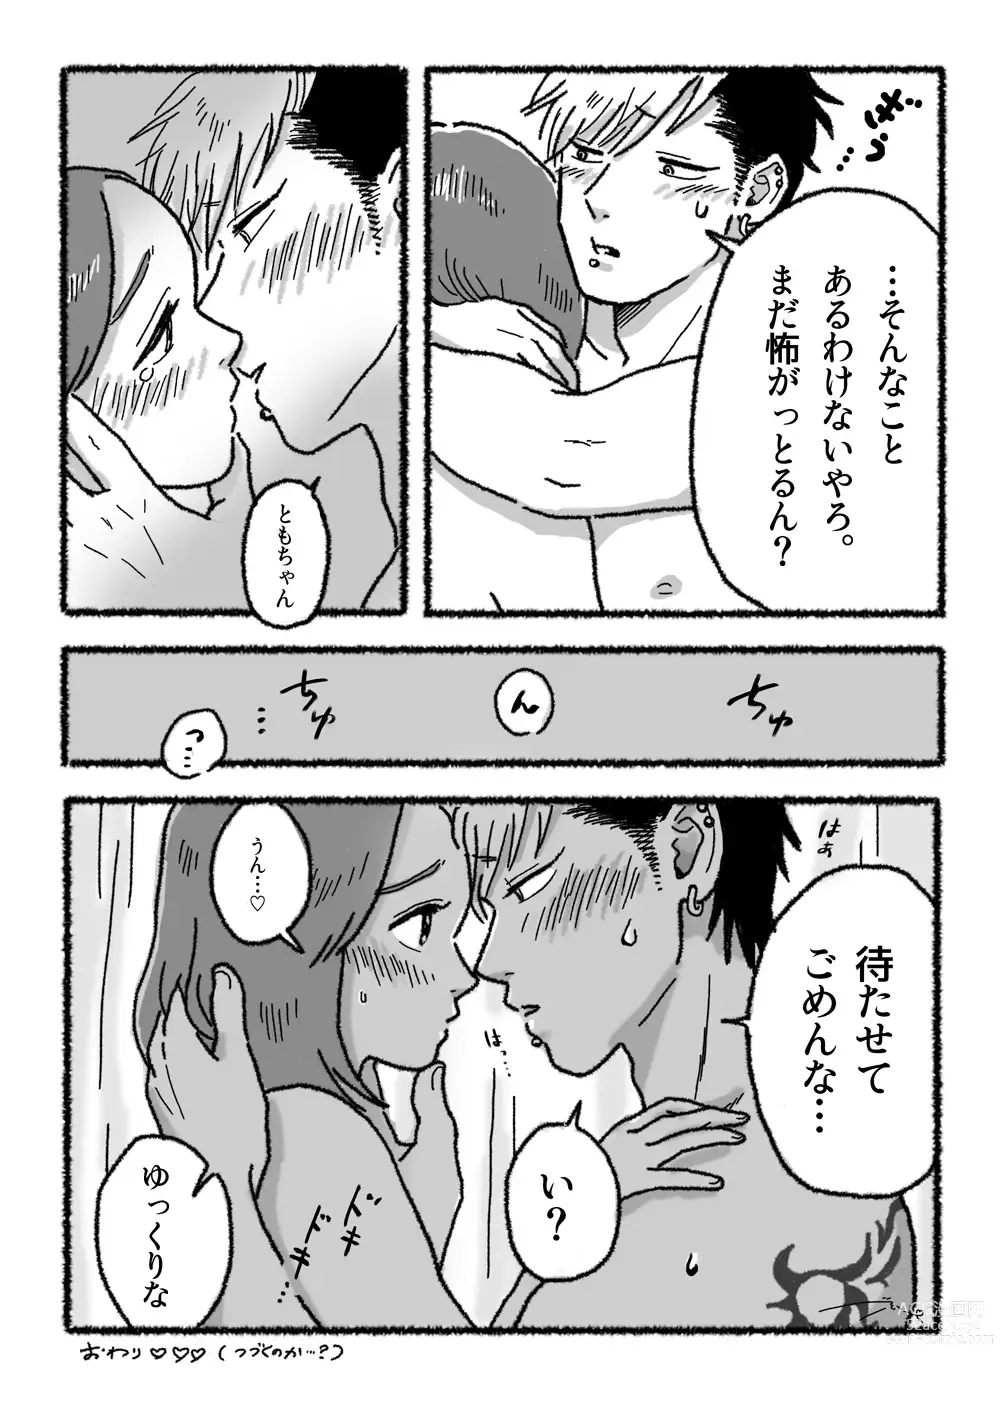 Page 4 of doujinshi Ryoutomo